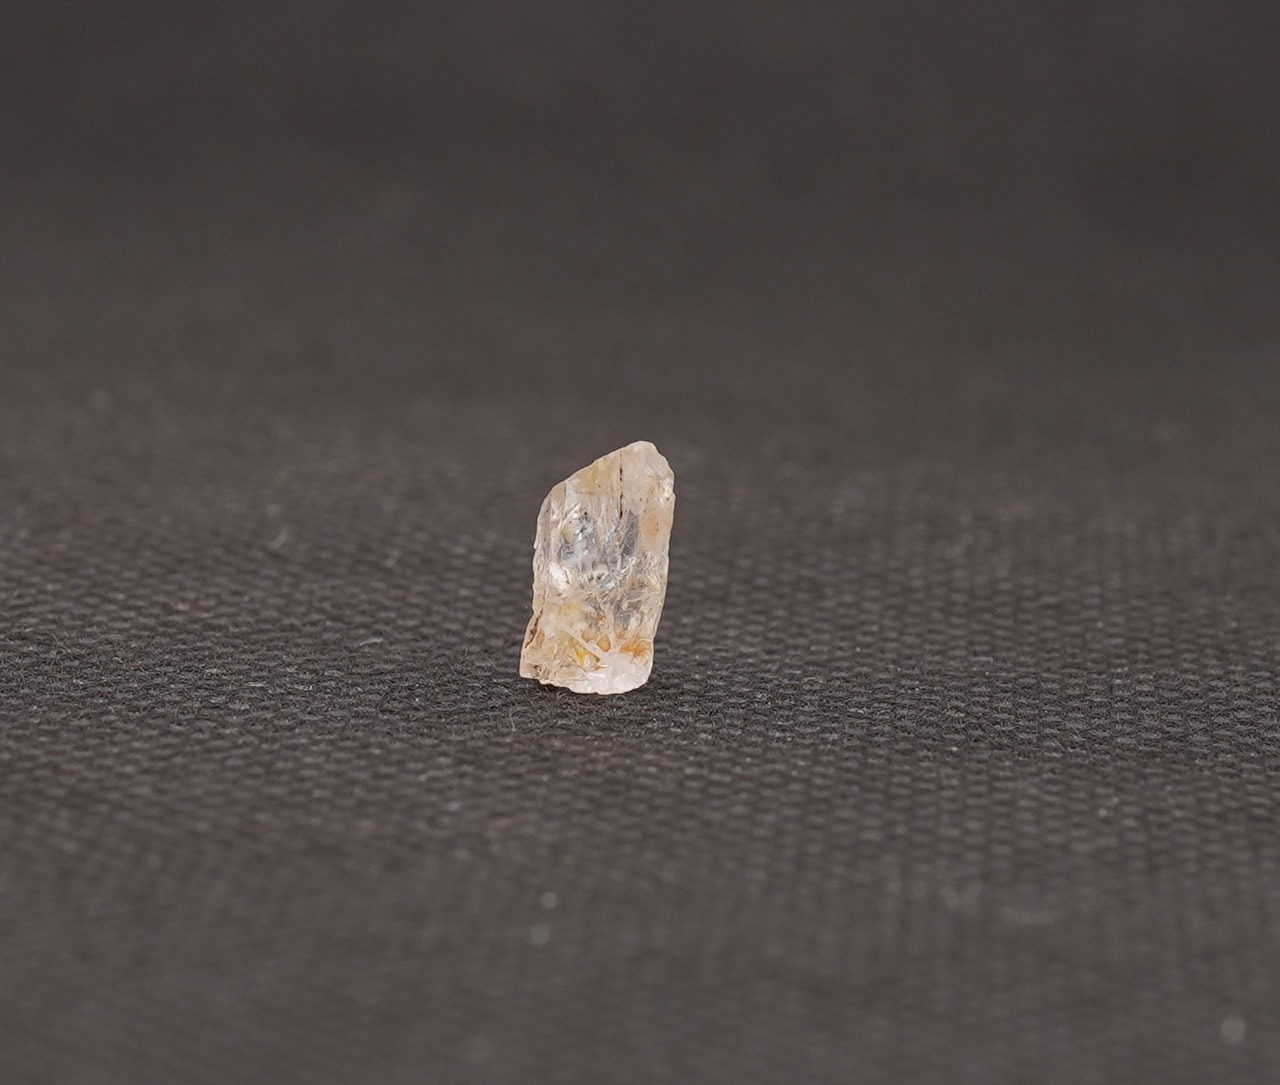 Fenacit nigerian cristal natural unicat f321